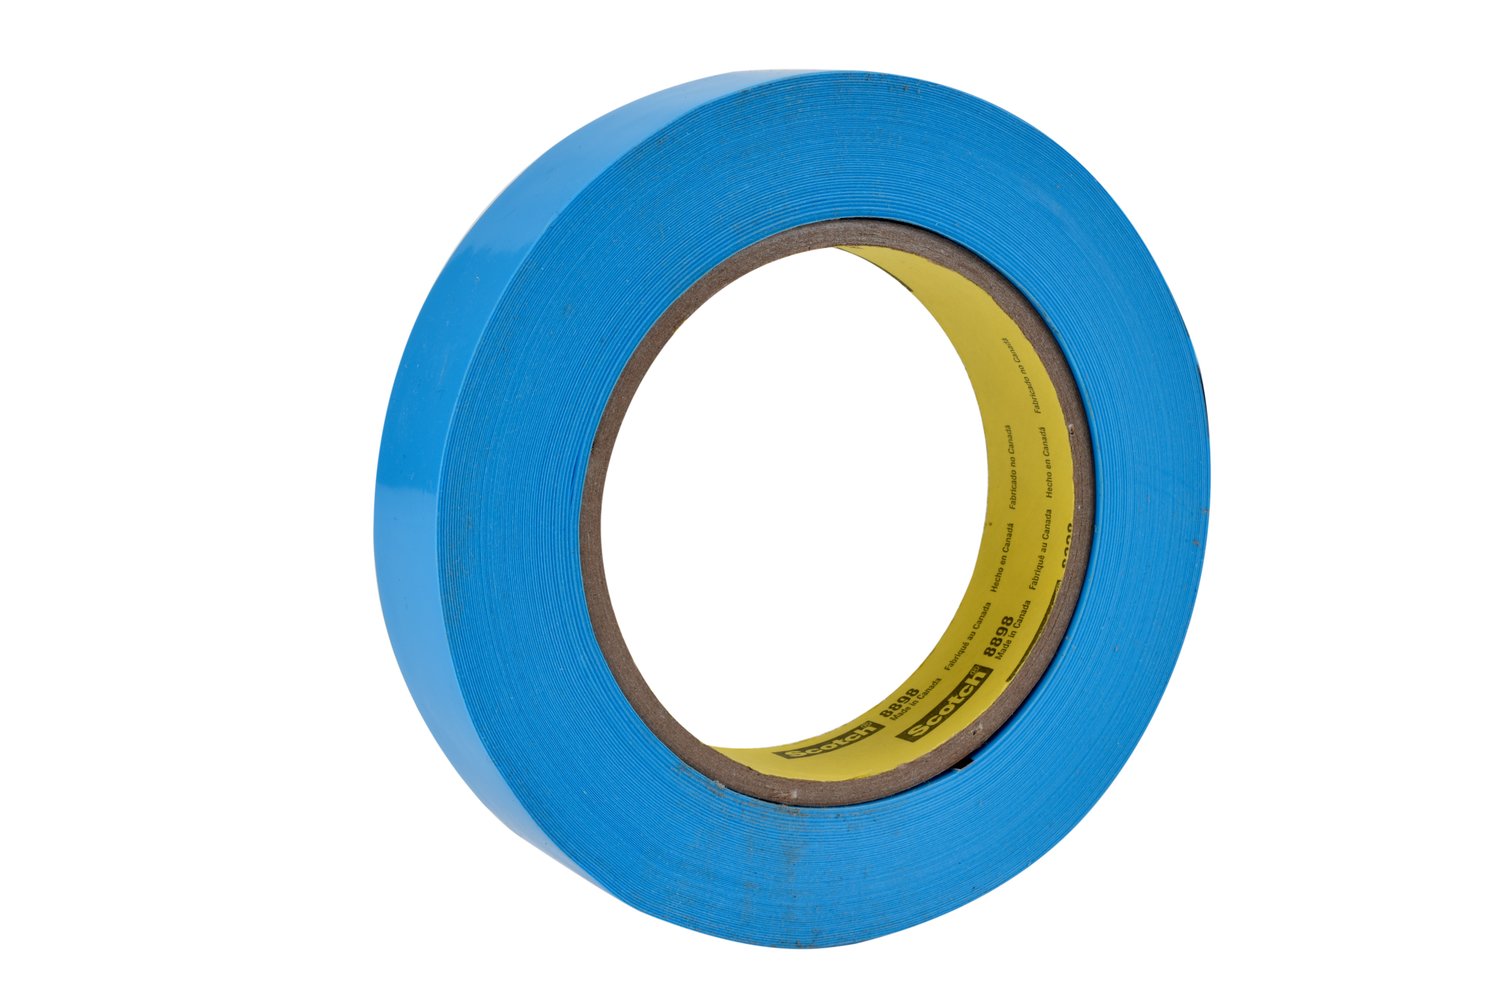 7100015737 - Scotch Strapping Tape 8898, Blue, 12 mm x 330 m, 4.6 mil, 18 rolls per
case